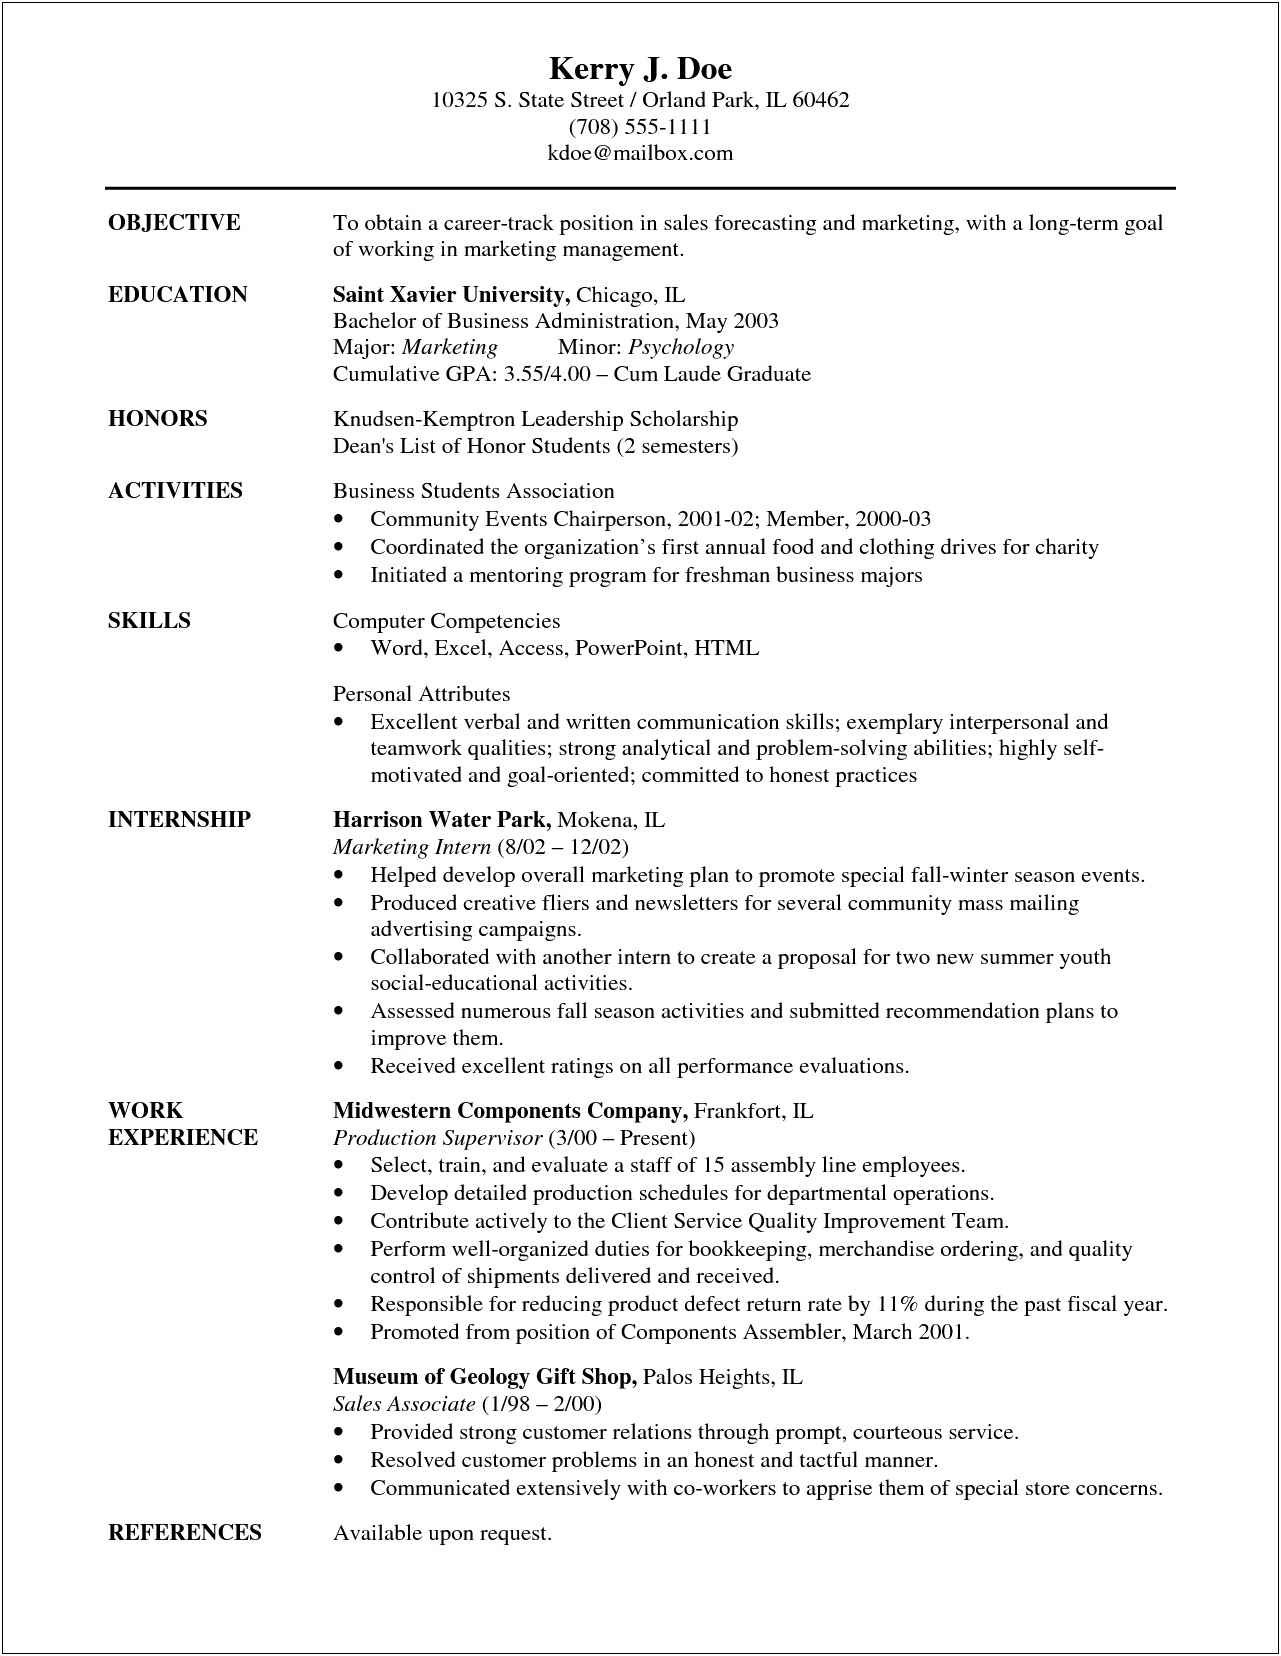 Sample Resume Objective For Seasonal Job